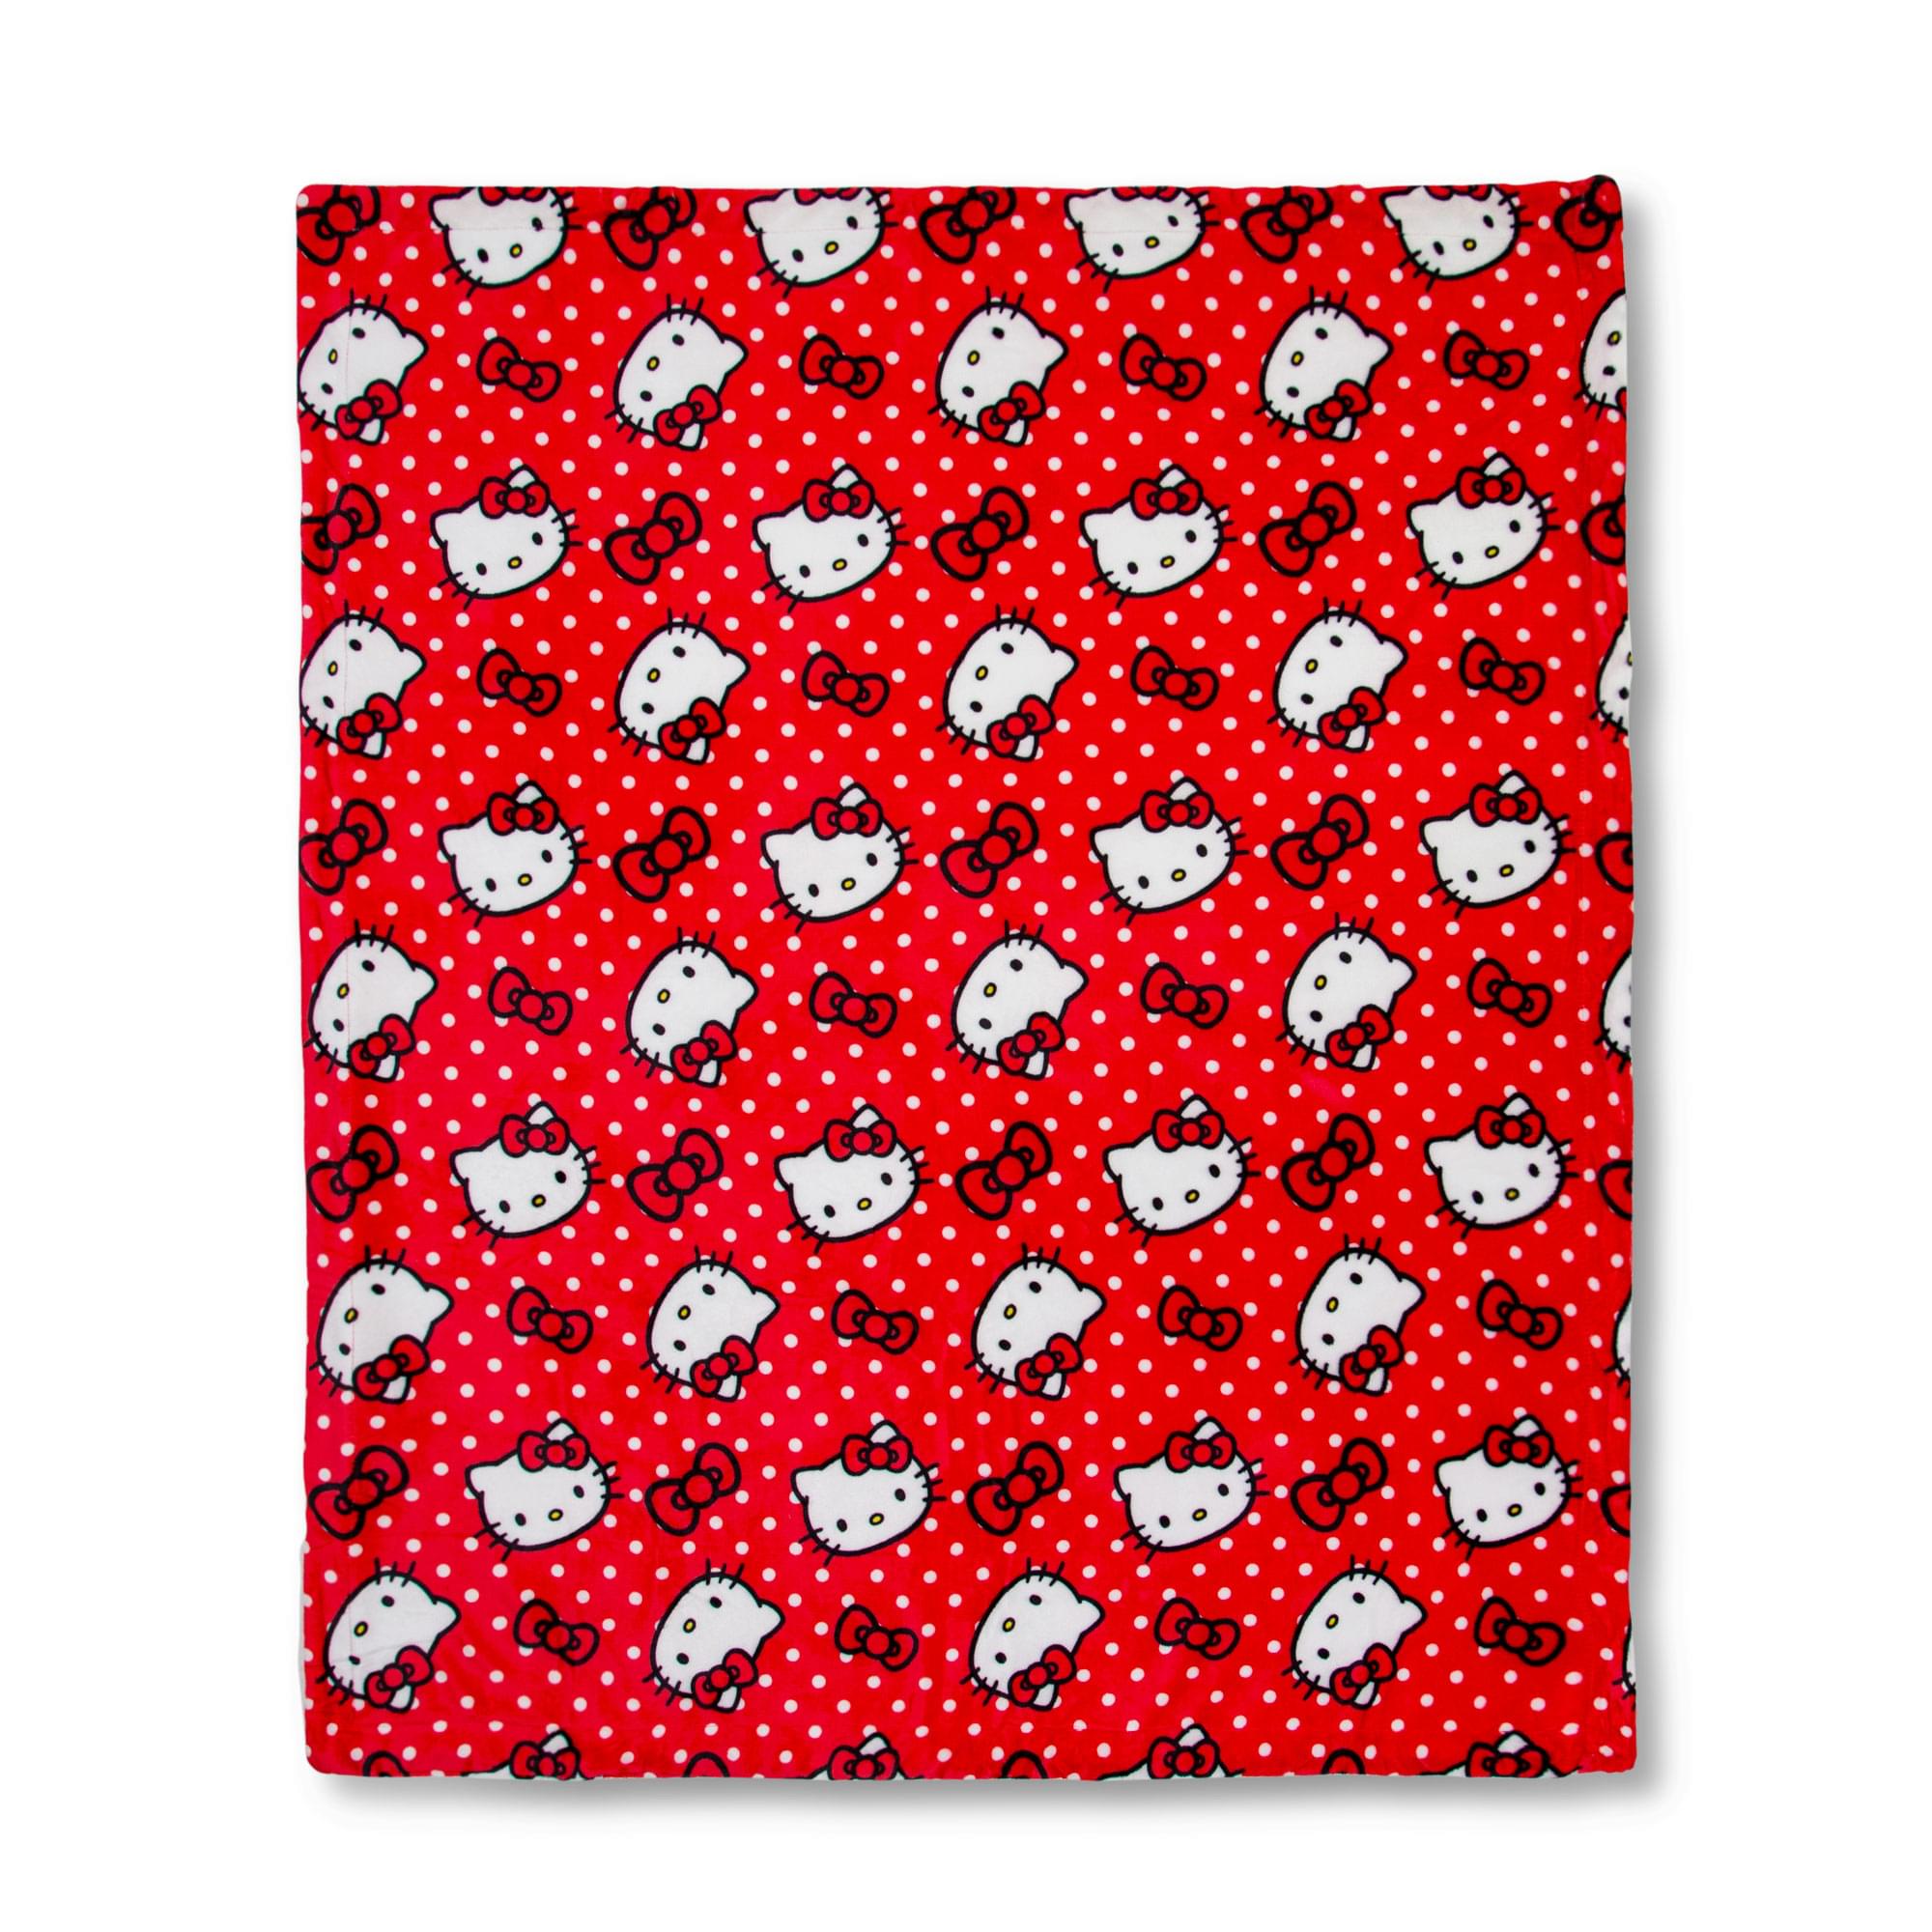 Sanrio Hello Kitty Red Polka Dots Sherpa Throw Blanket , 50 X 60 Inches